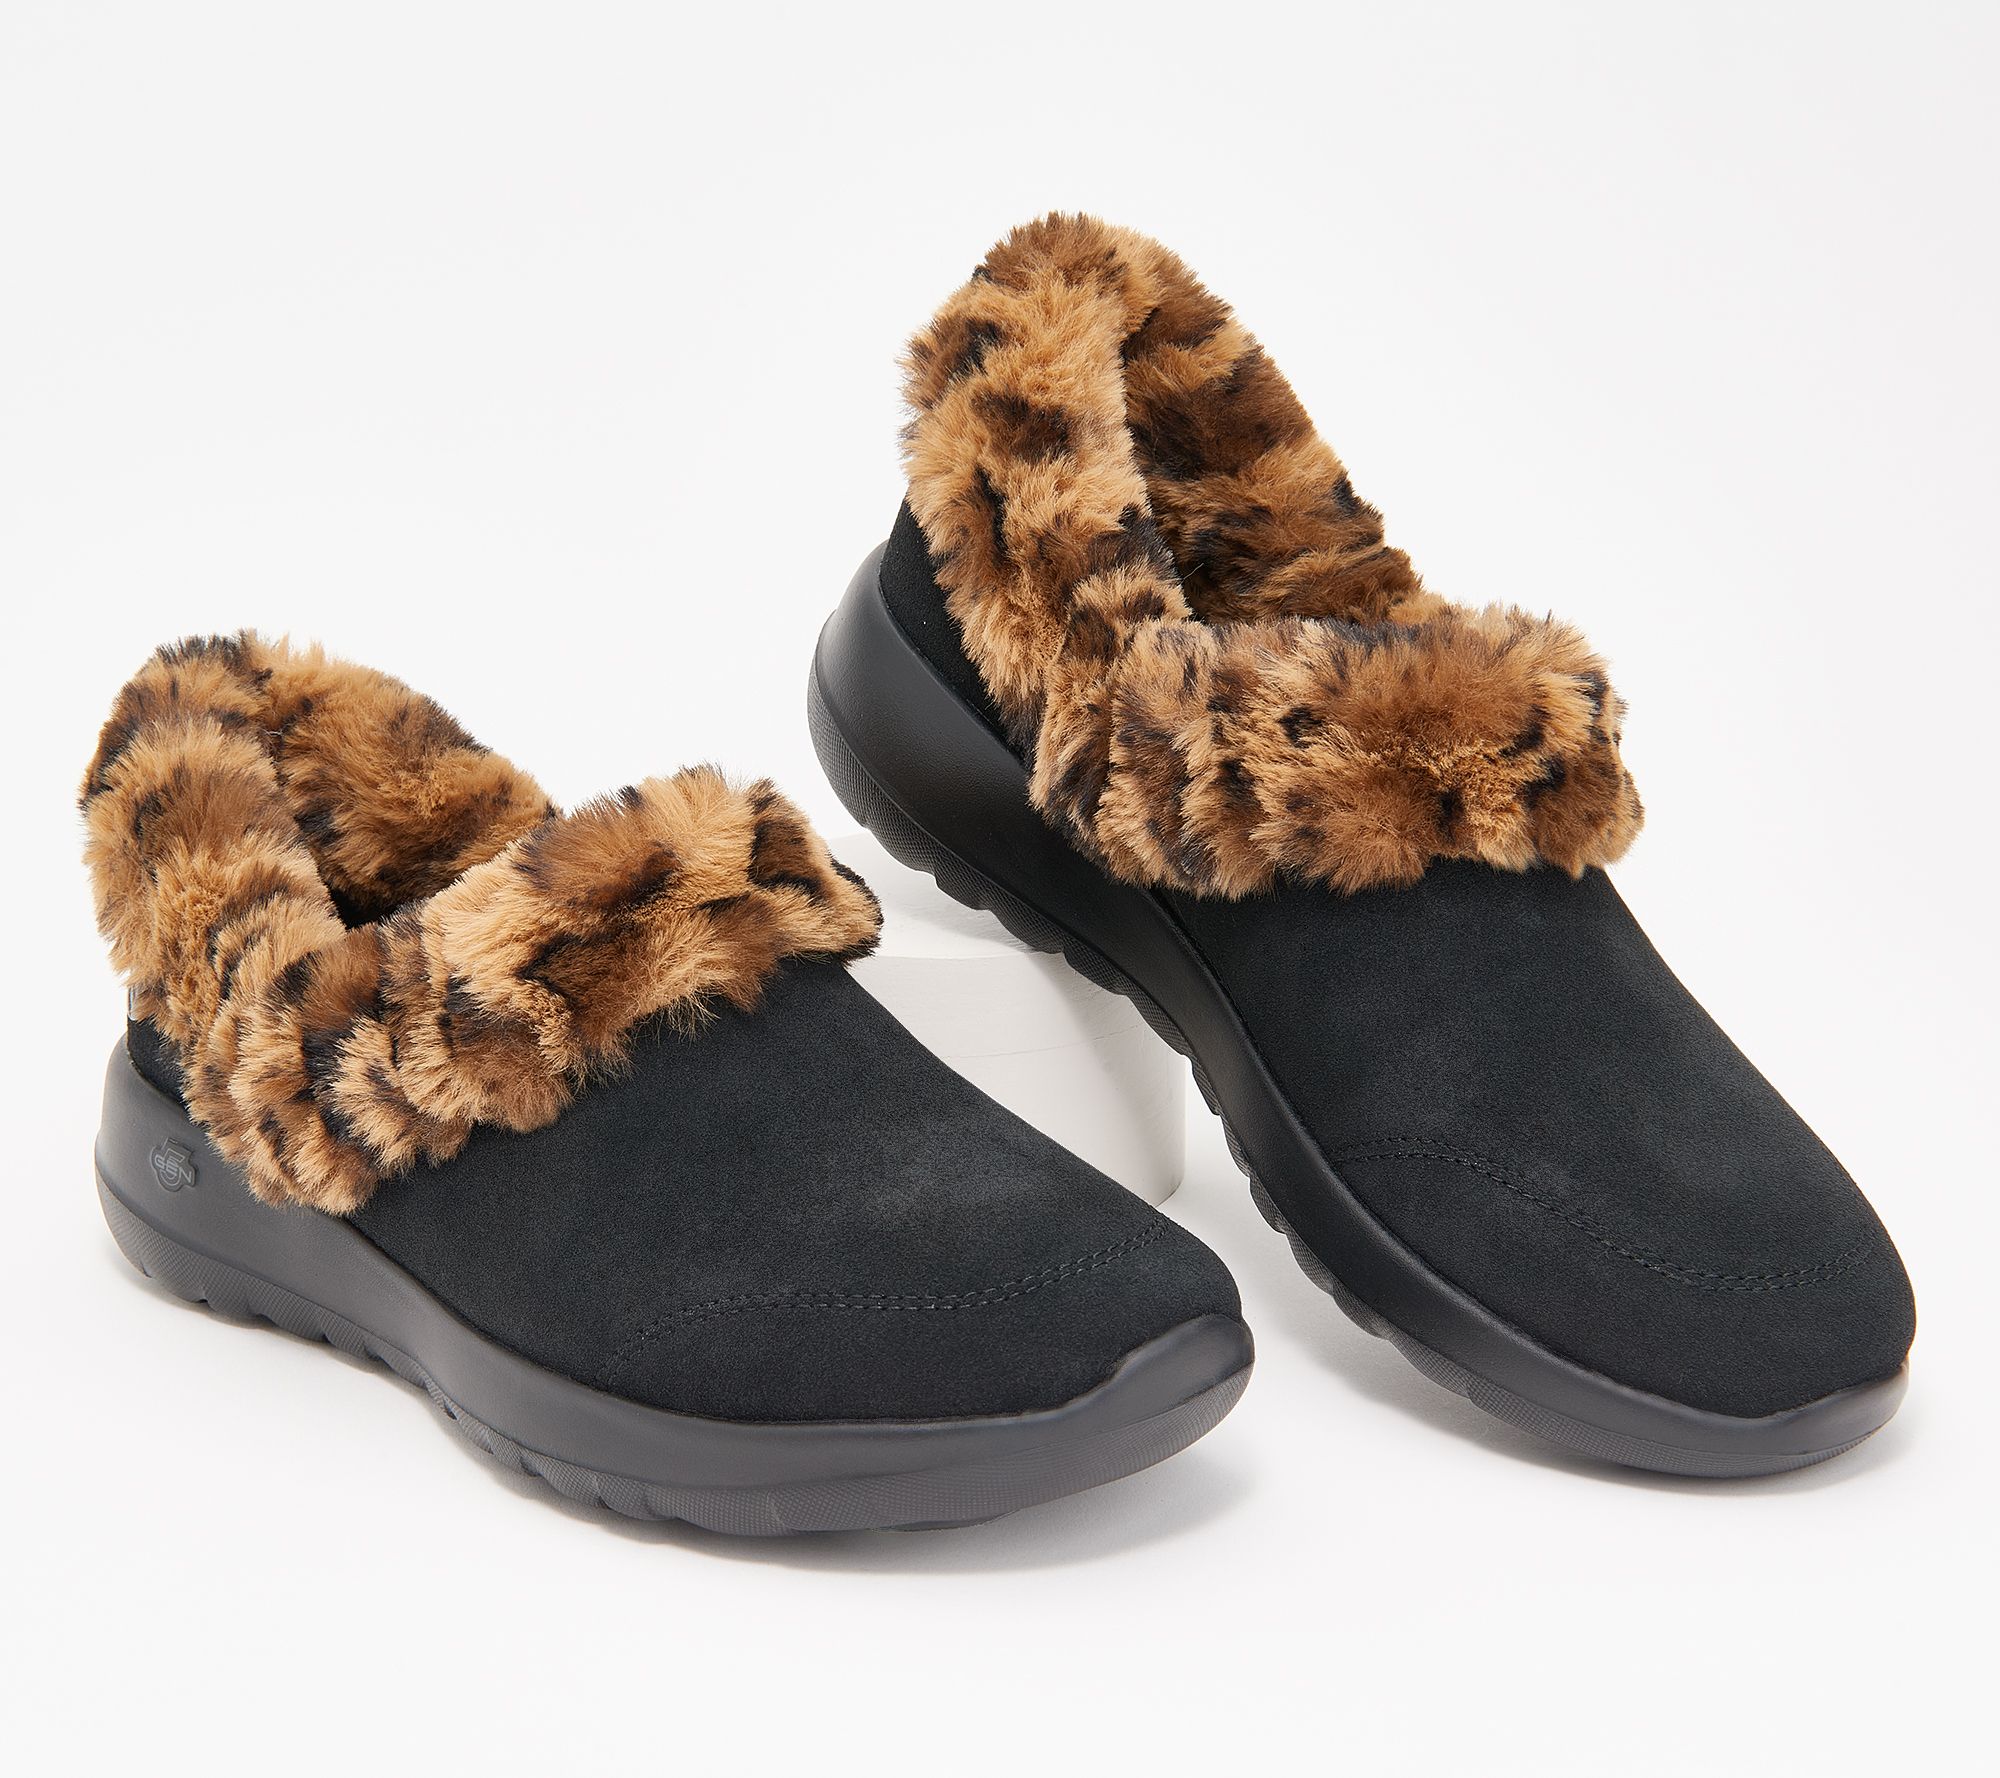 Skechers On-The-Go Joy Suede and Faux Fur Slip-Ons- Cozy Catch, Size 9-1/2 Medium, Black Leopard